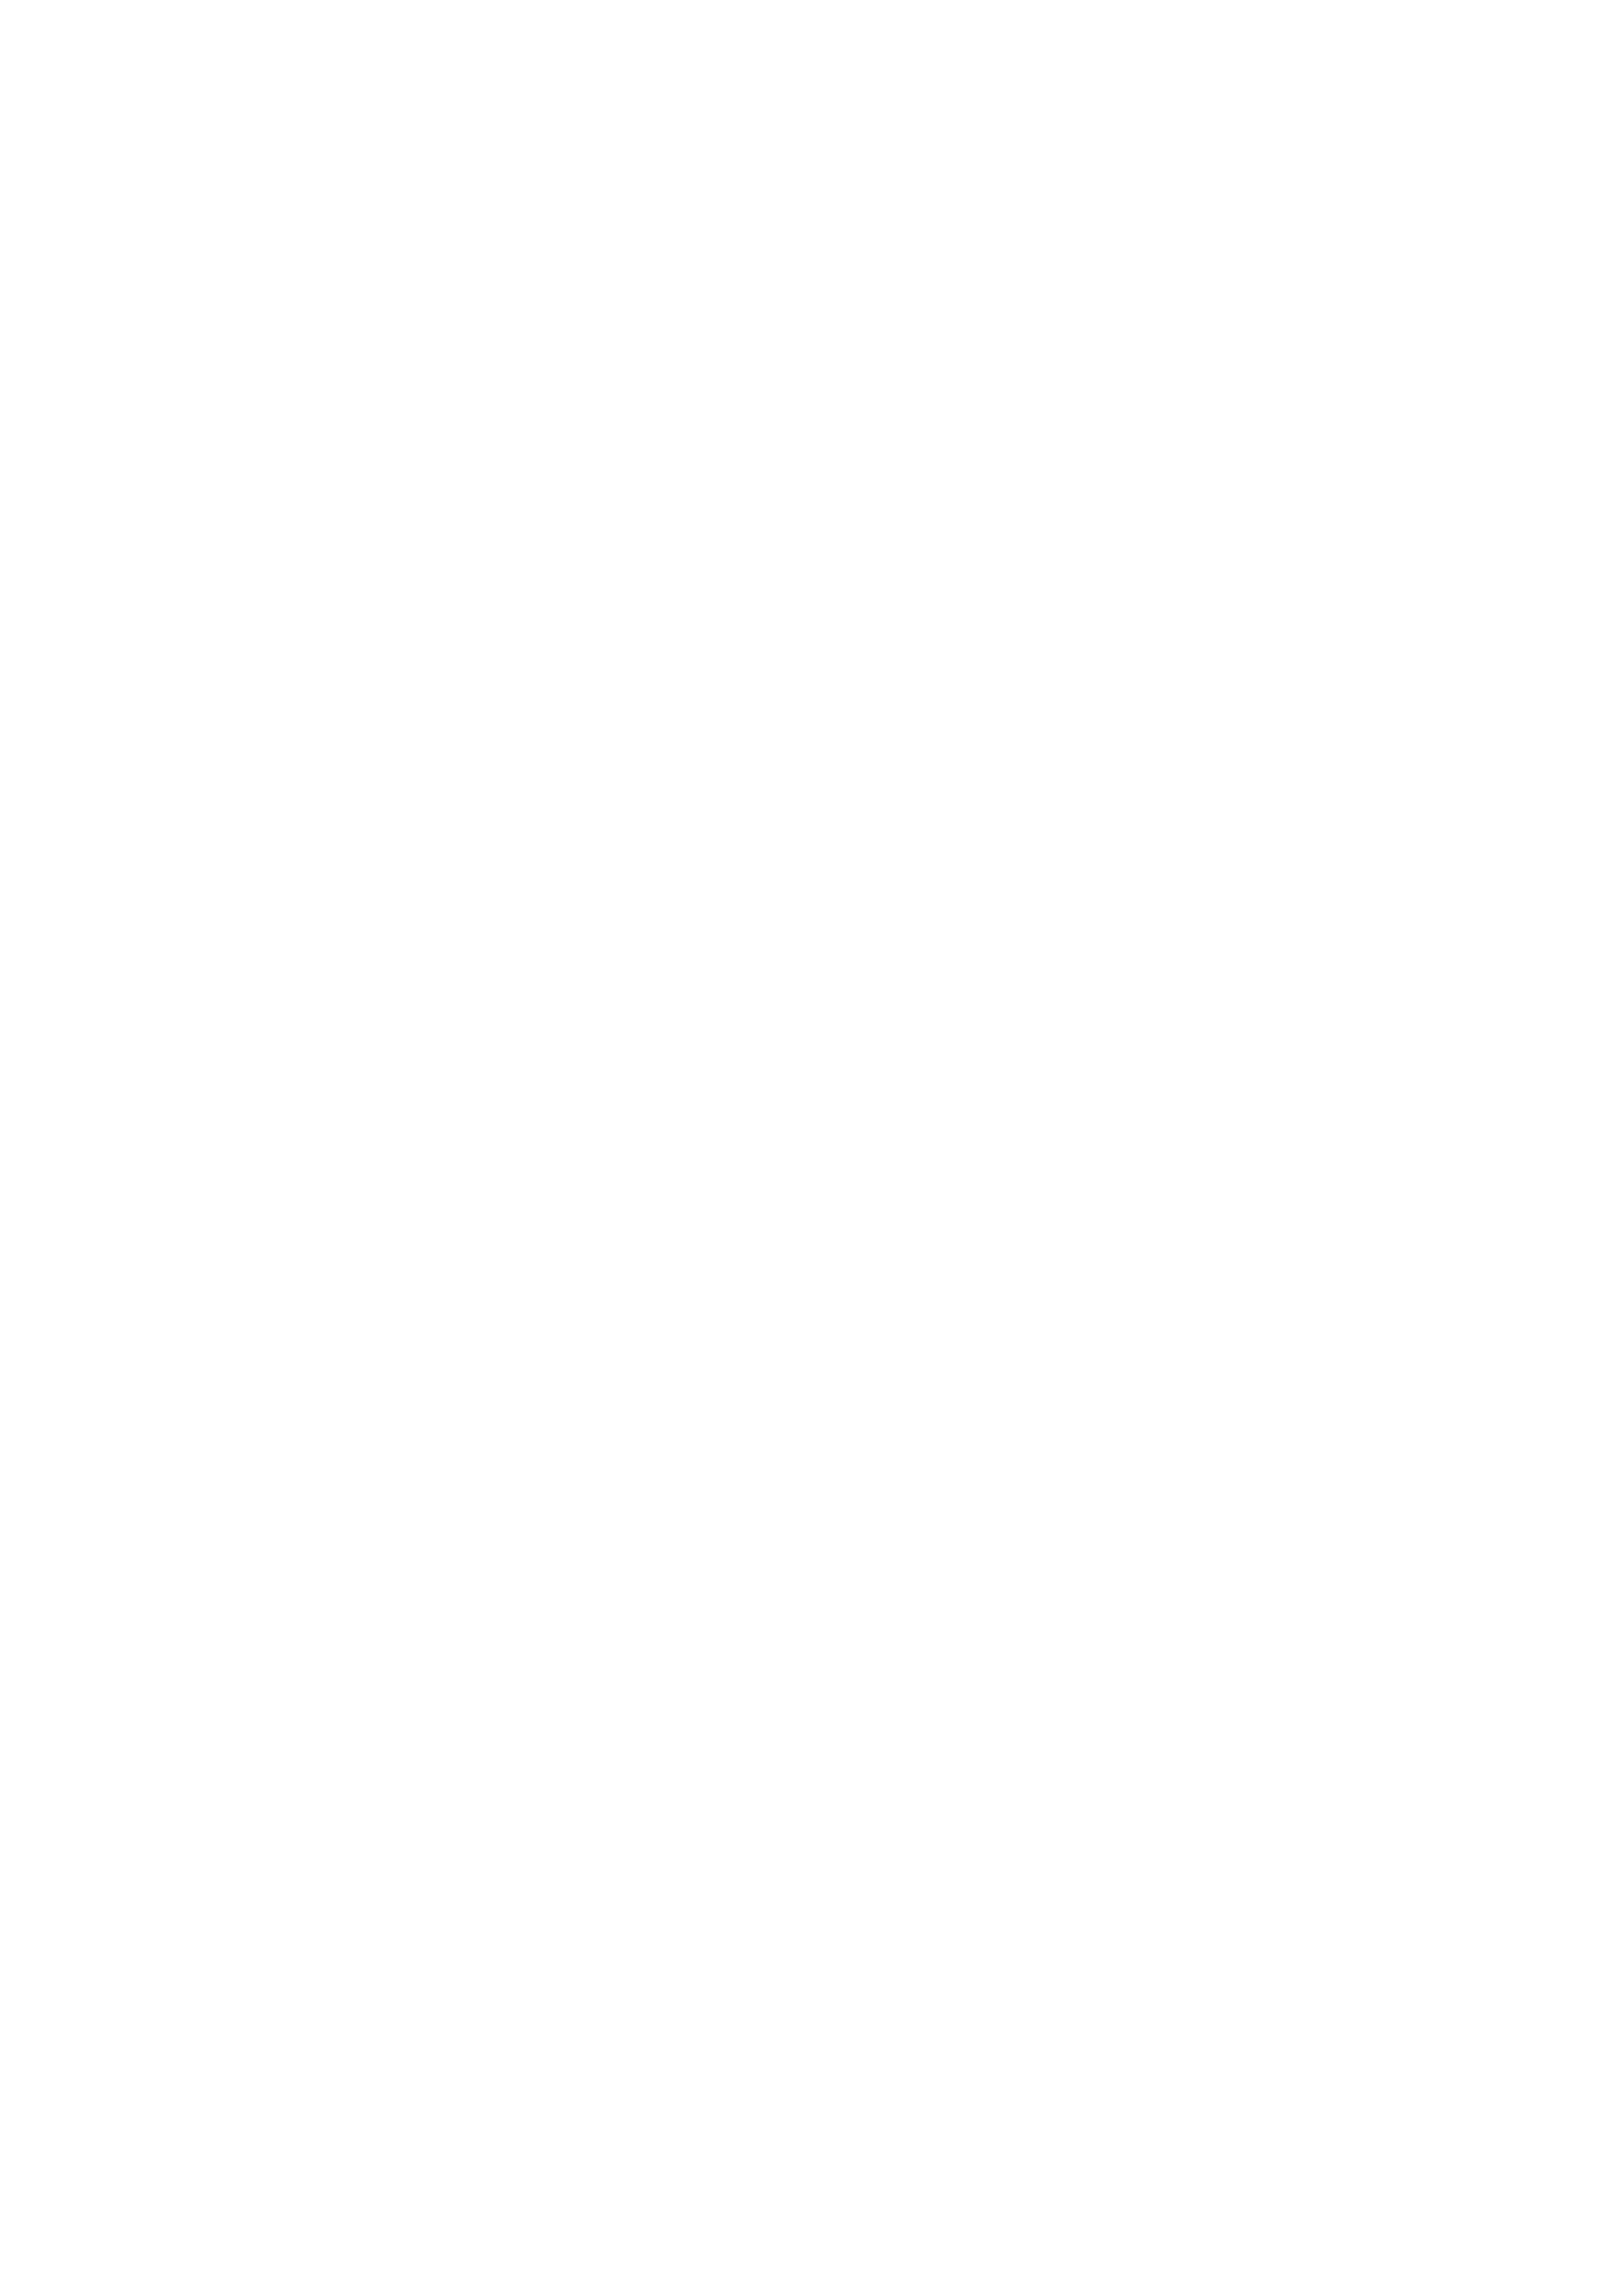 Aurora Yoga